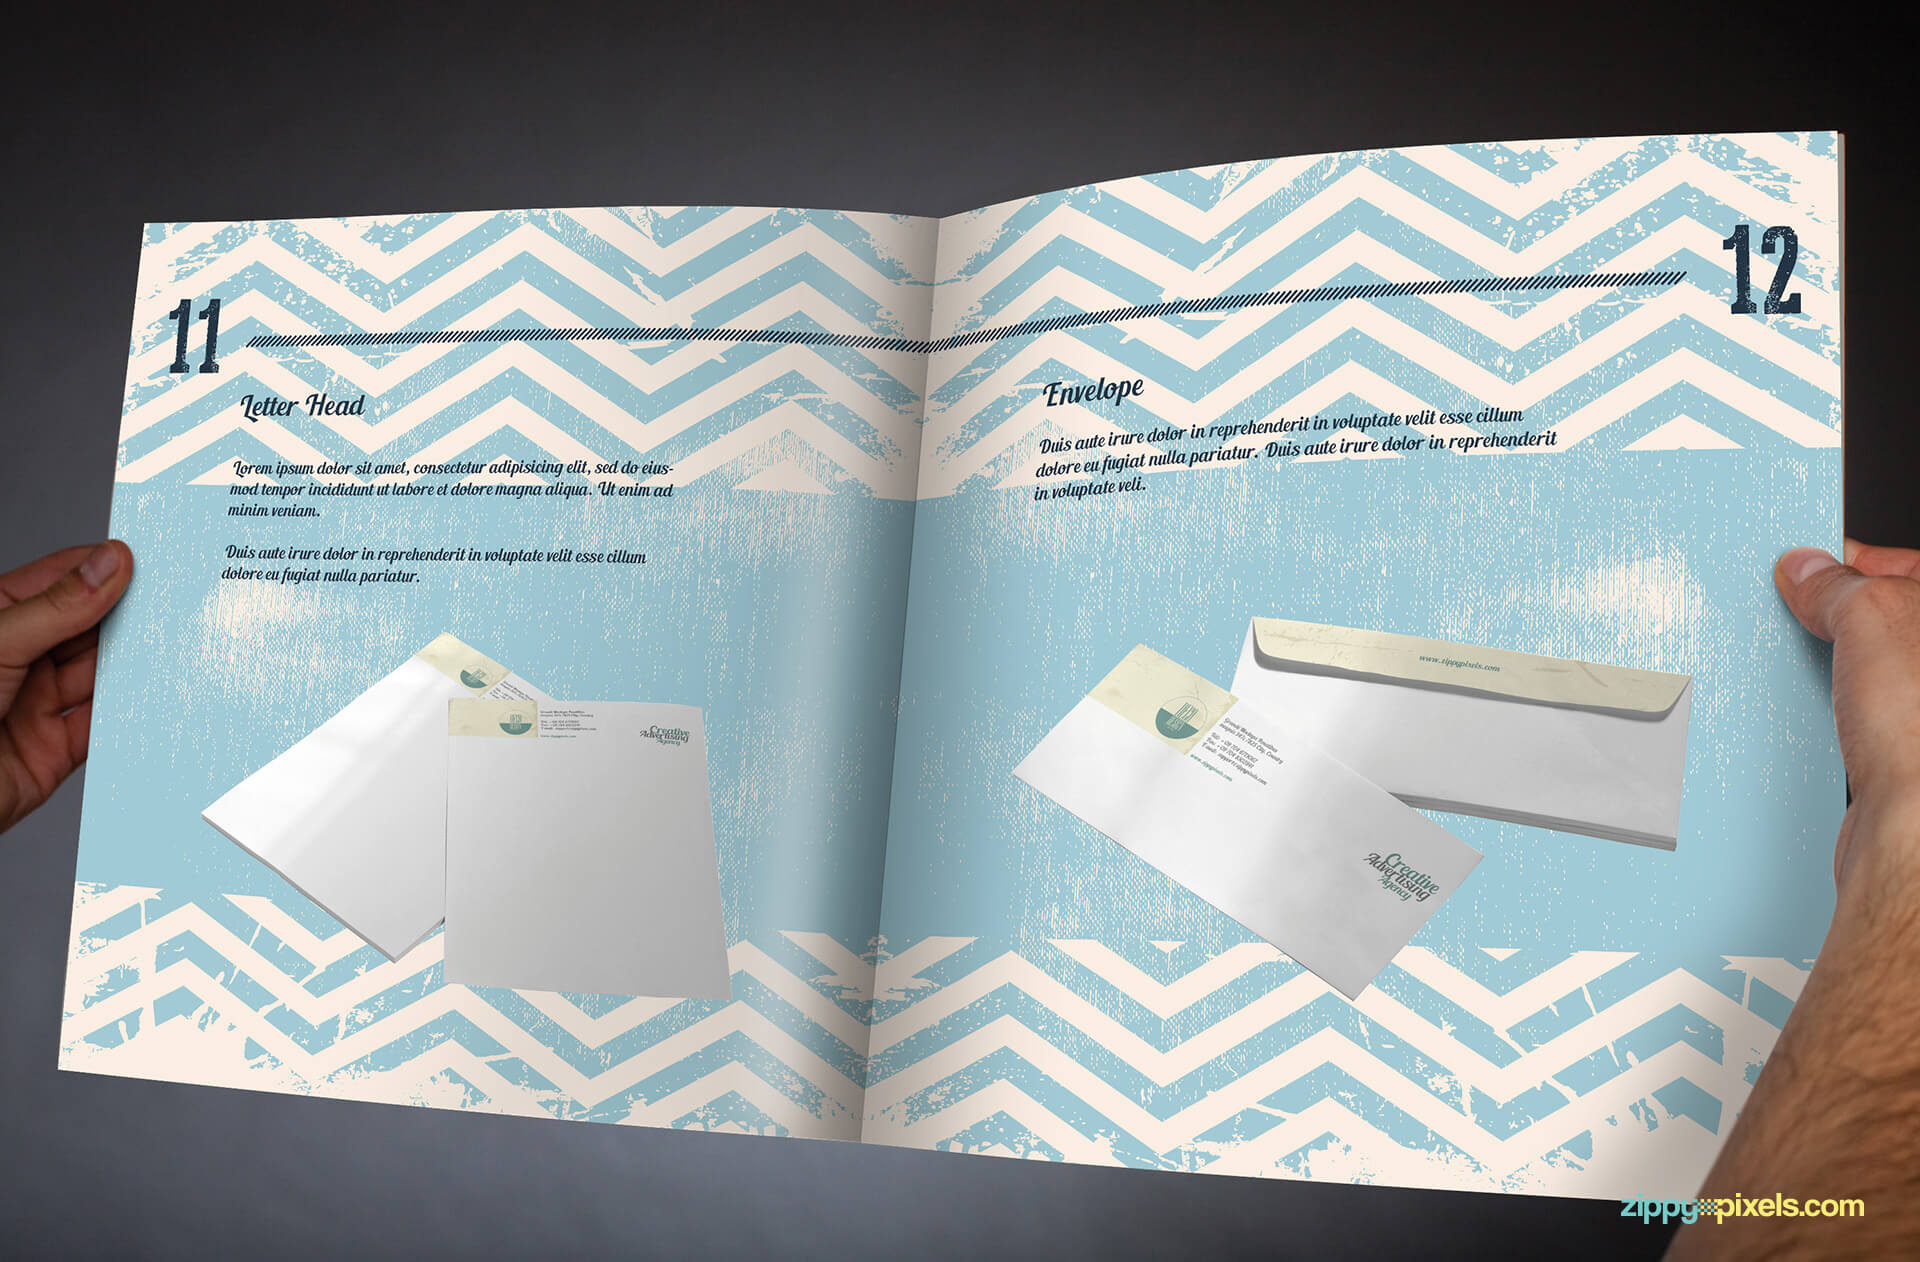 12-brand-book-13-letterhead-business-card